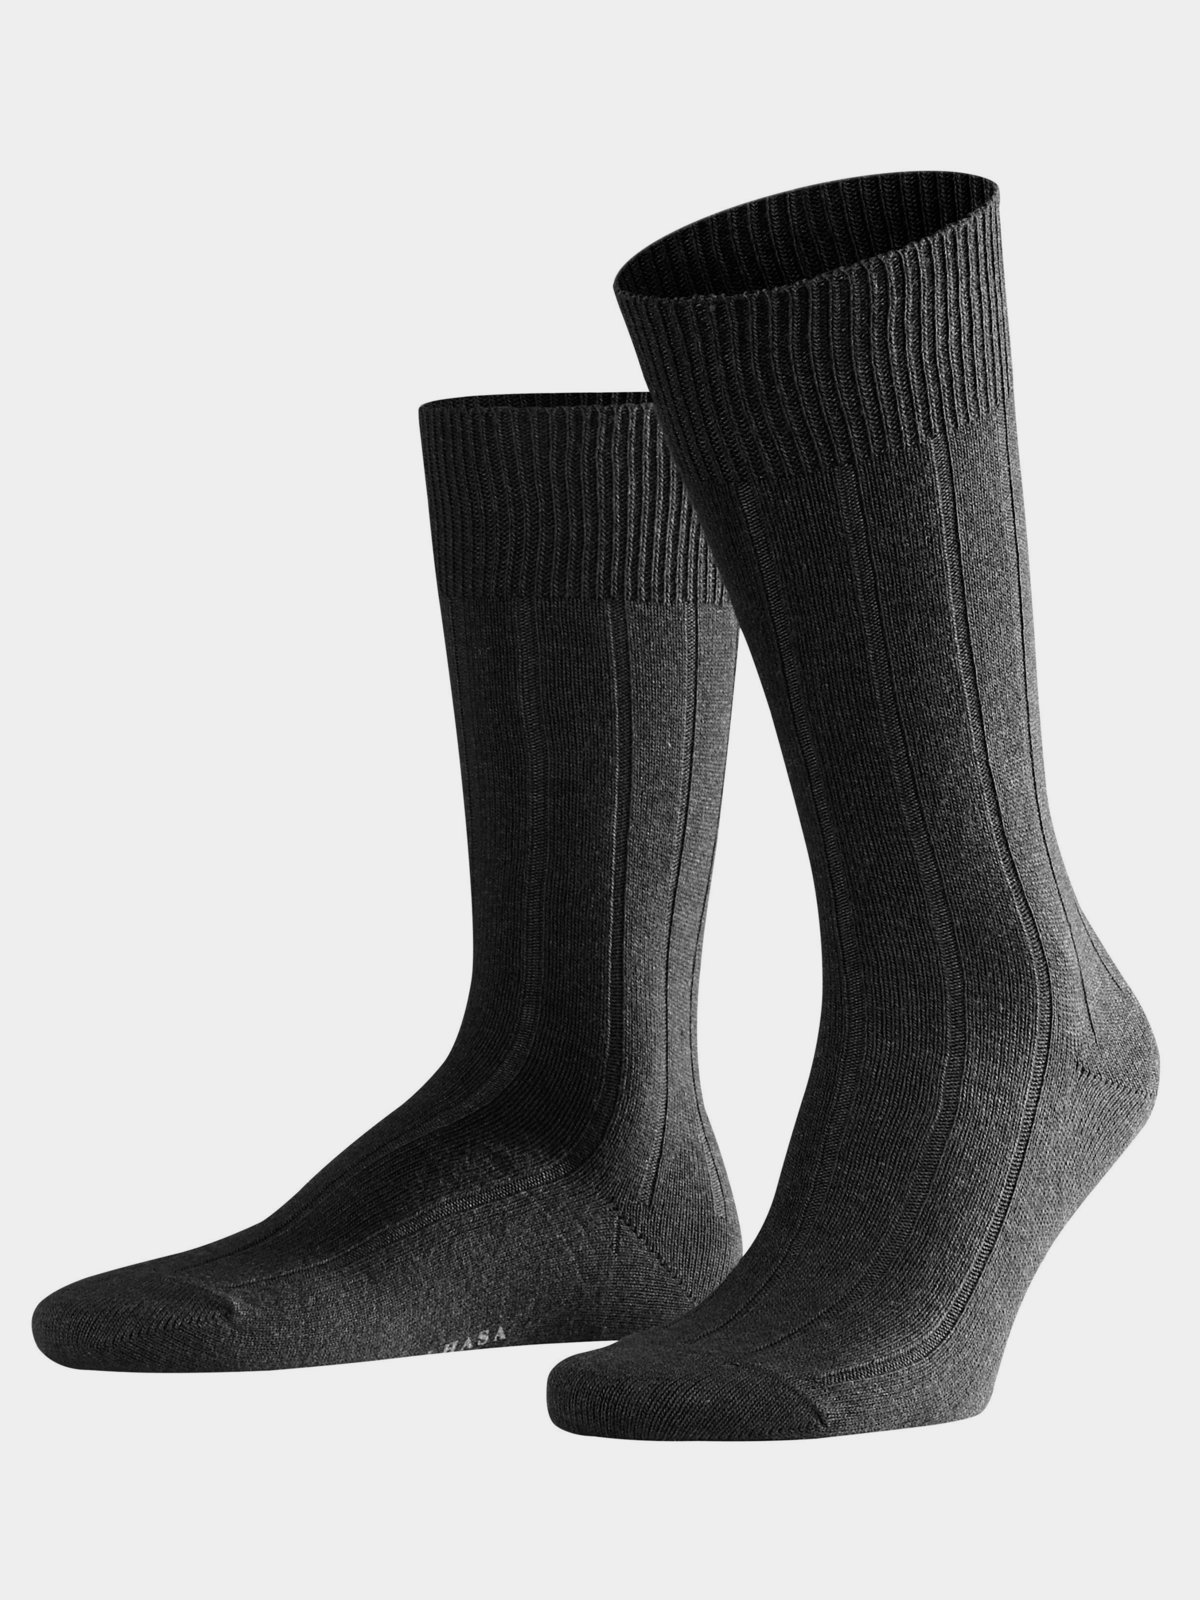 Falke Wadenhohe Socken mit Kaschmiranteil